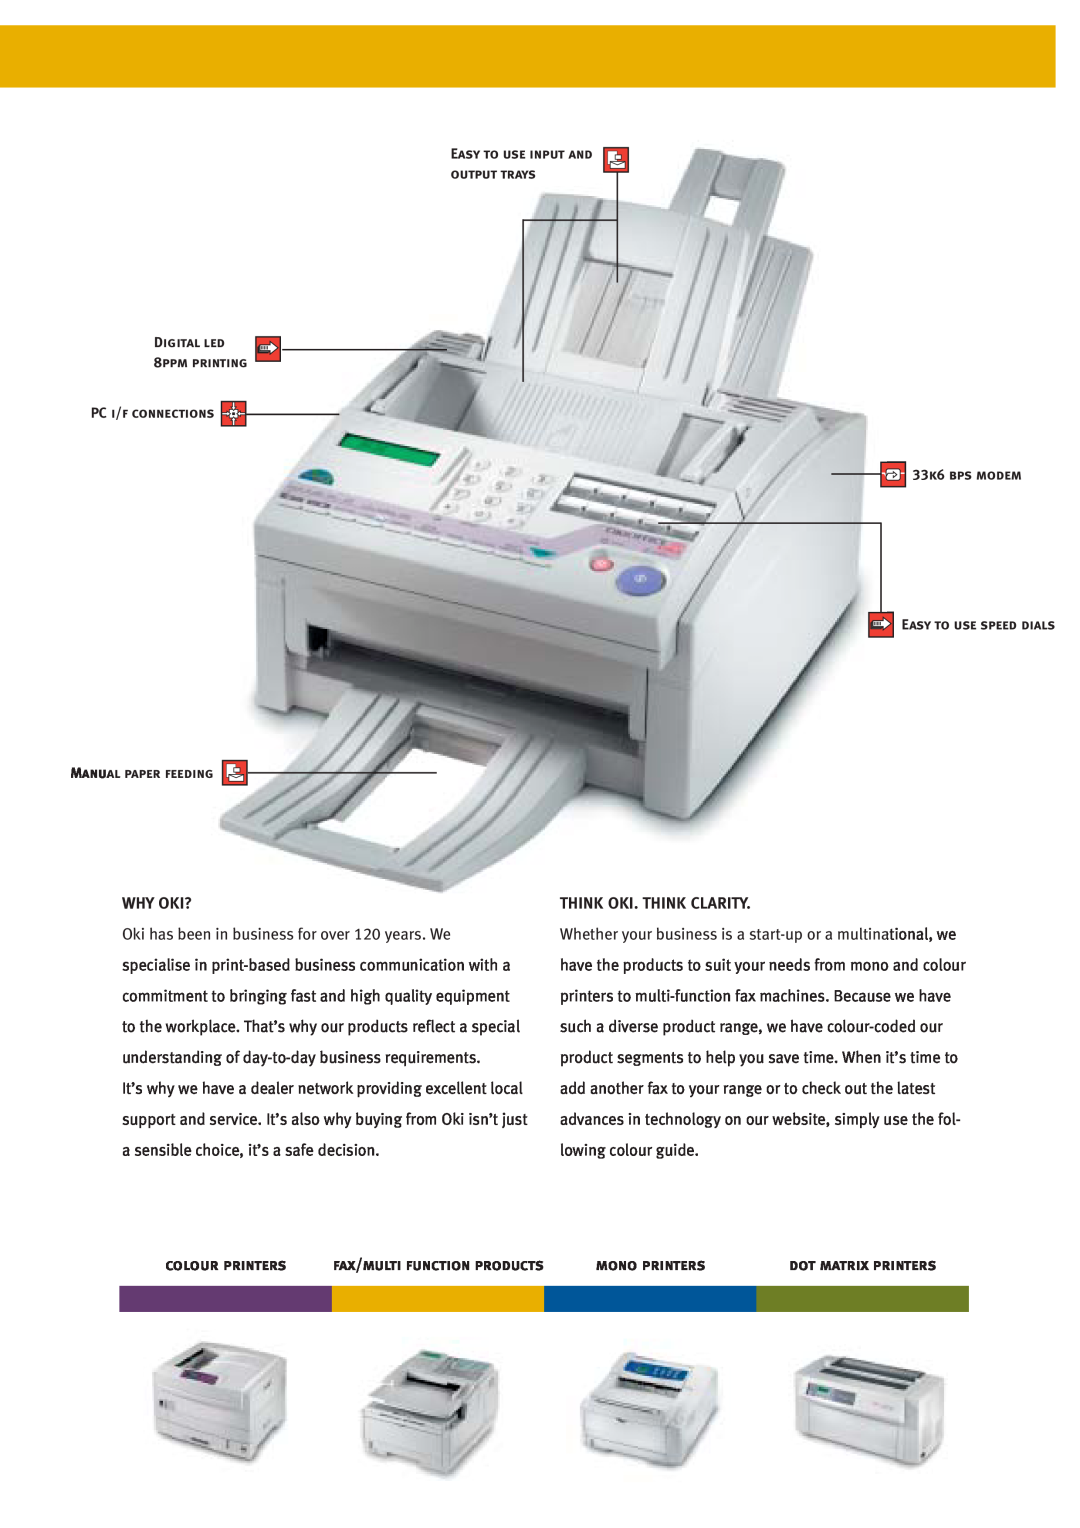 Oki 86 manual Why Oki?, Think Oki. Think Clarity, colour printers, fax/multi function products, mono printers 